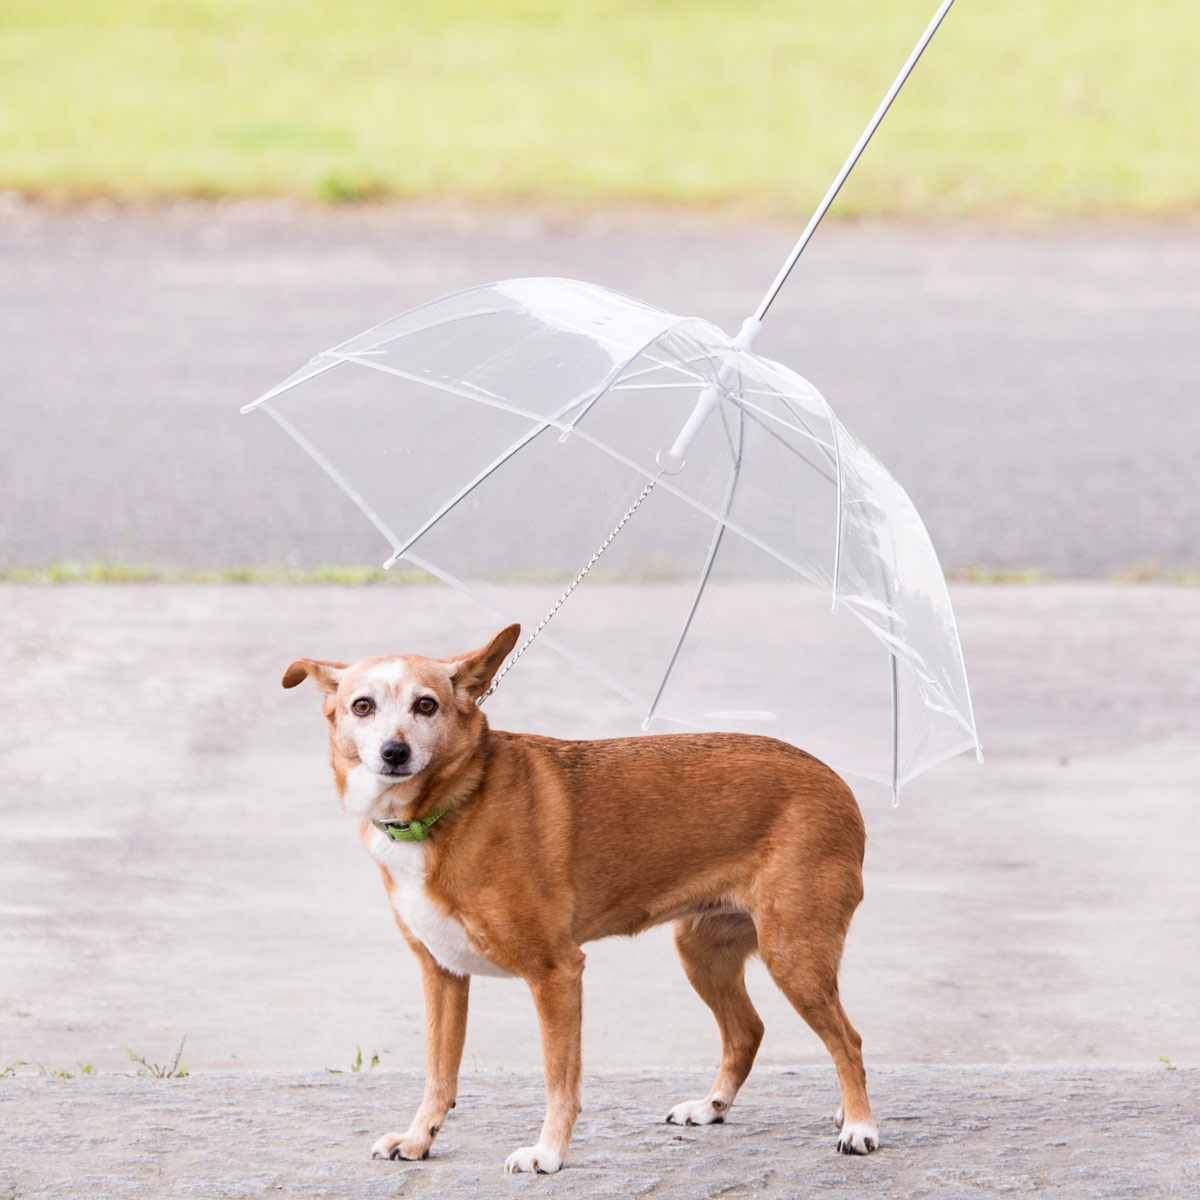 Hundeschirm Regenschirm für Hunde Schirm transparent Regenmantel Ersatz